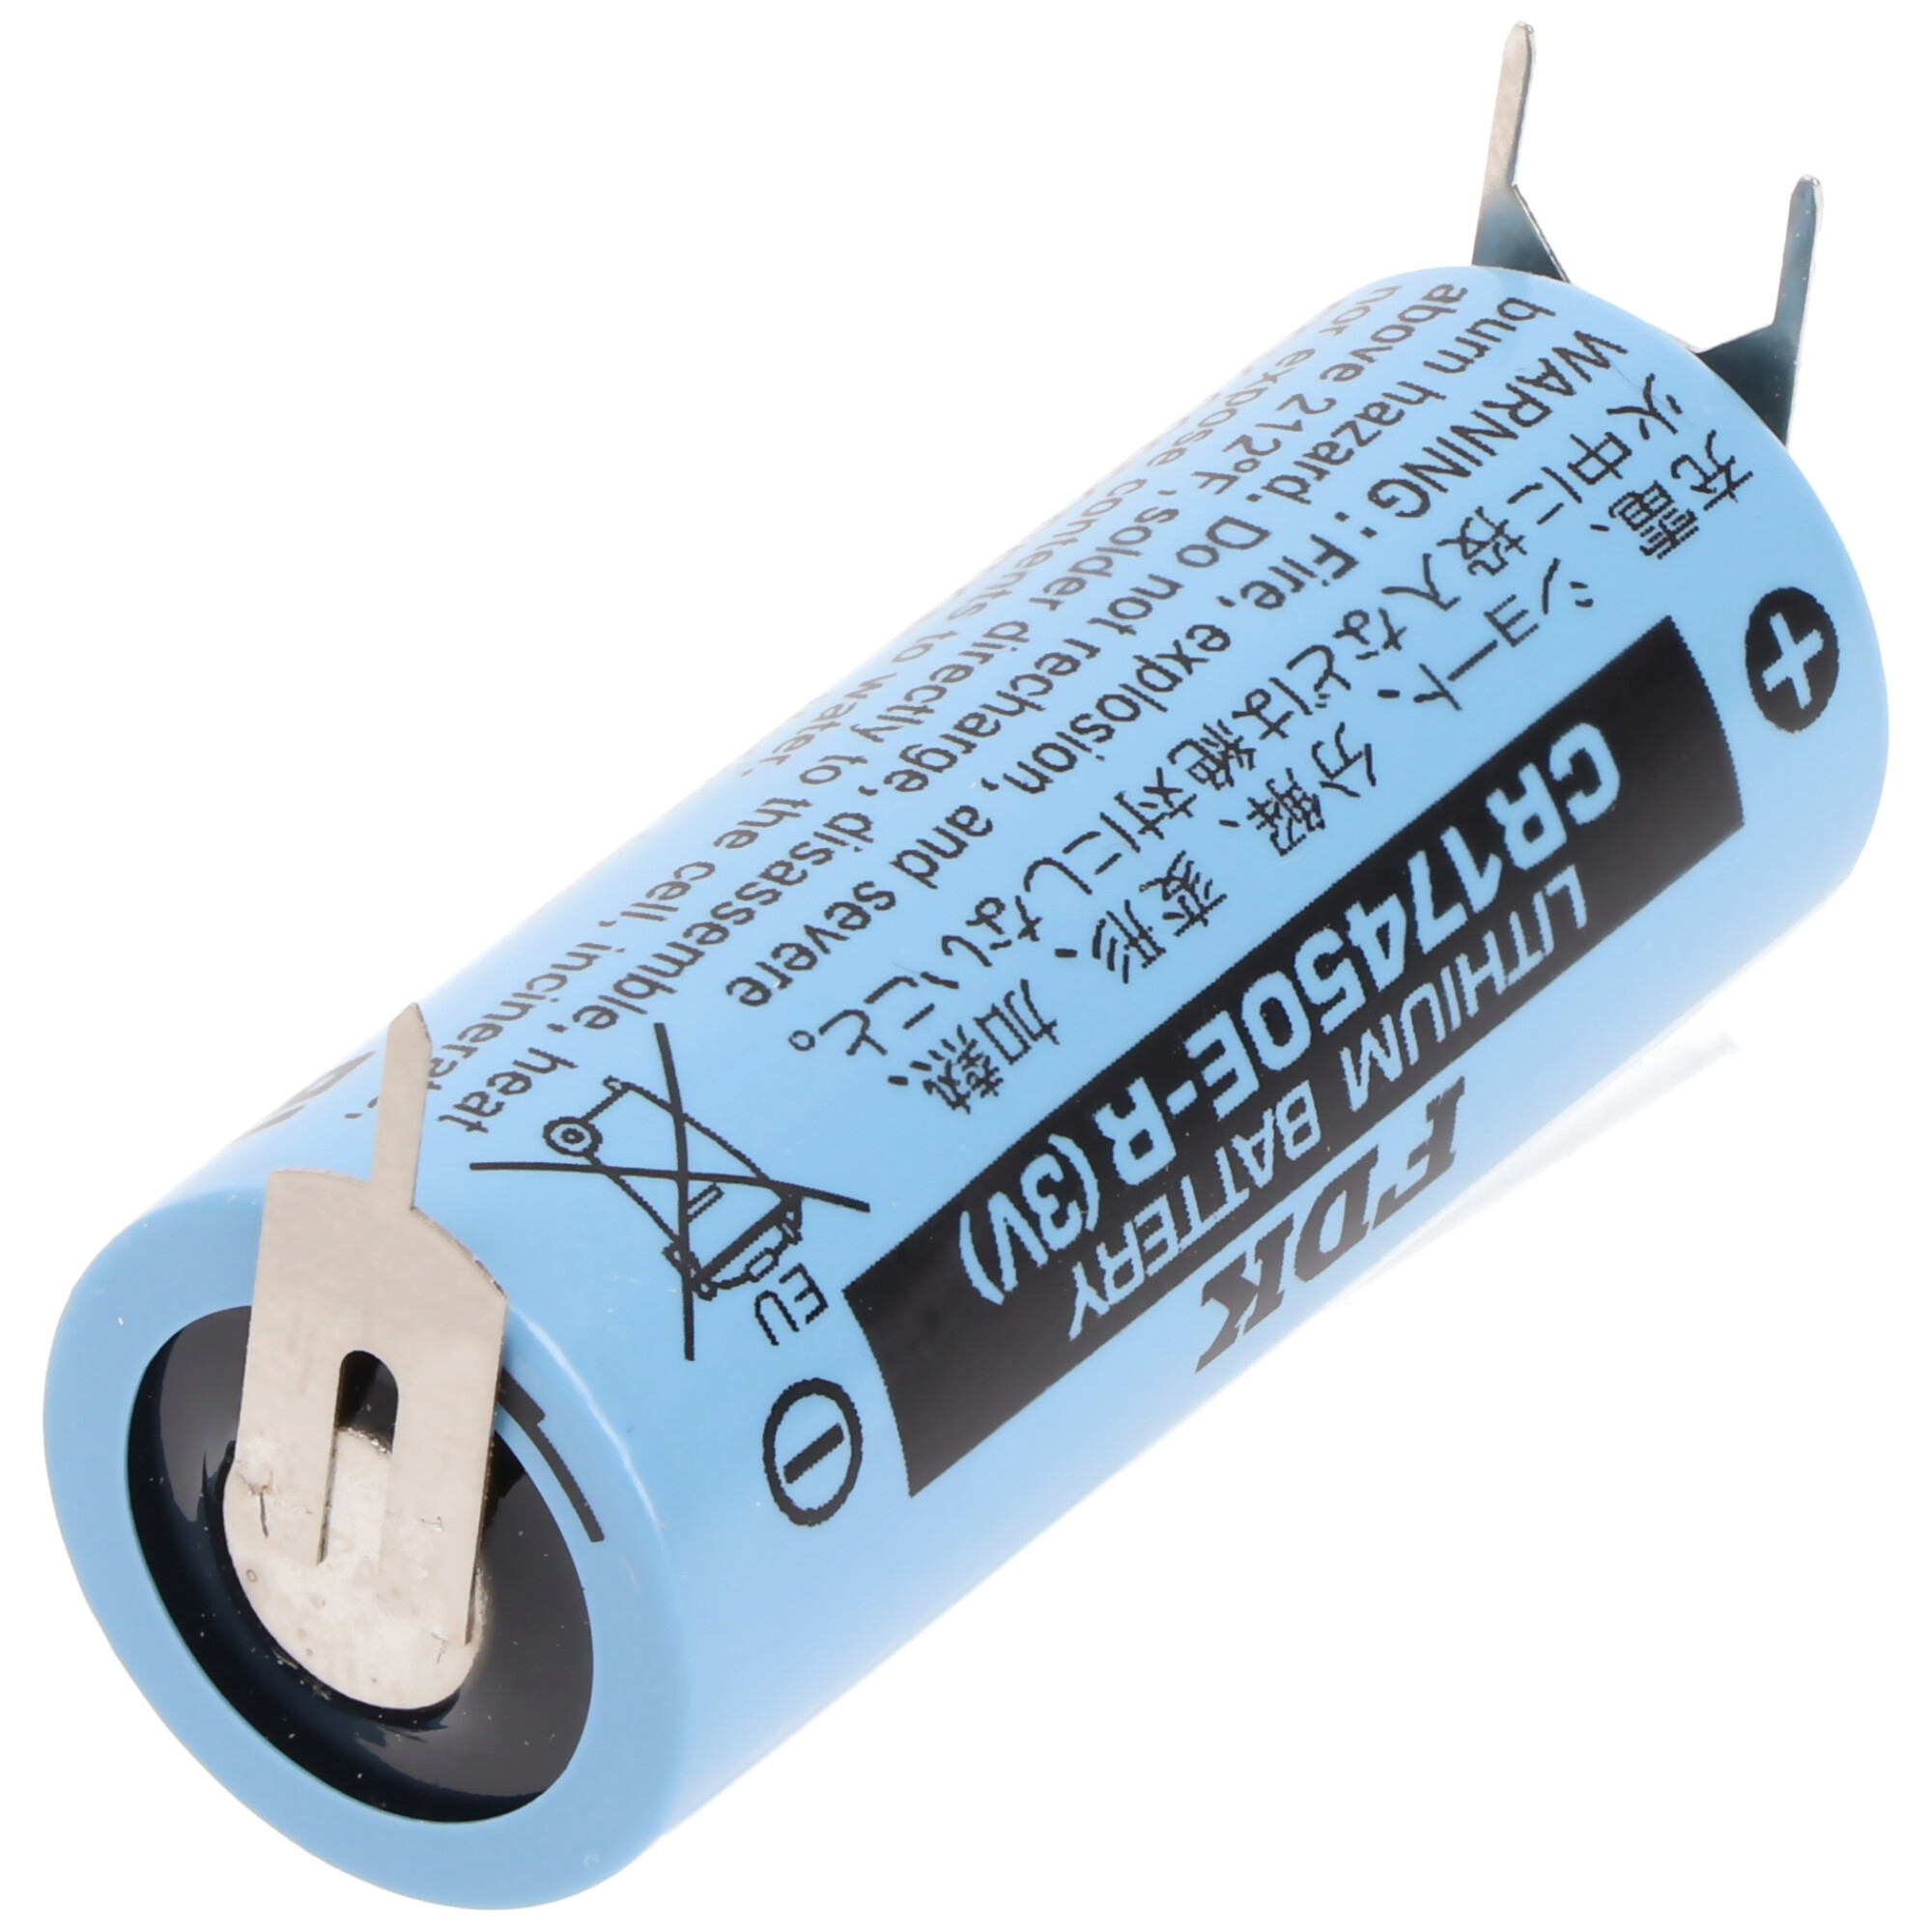 Sanyo Lithium Batterie CR17450E-R Size A, 3V, 3er Print Lötfahnen, ++-